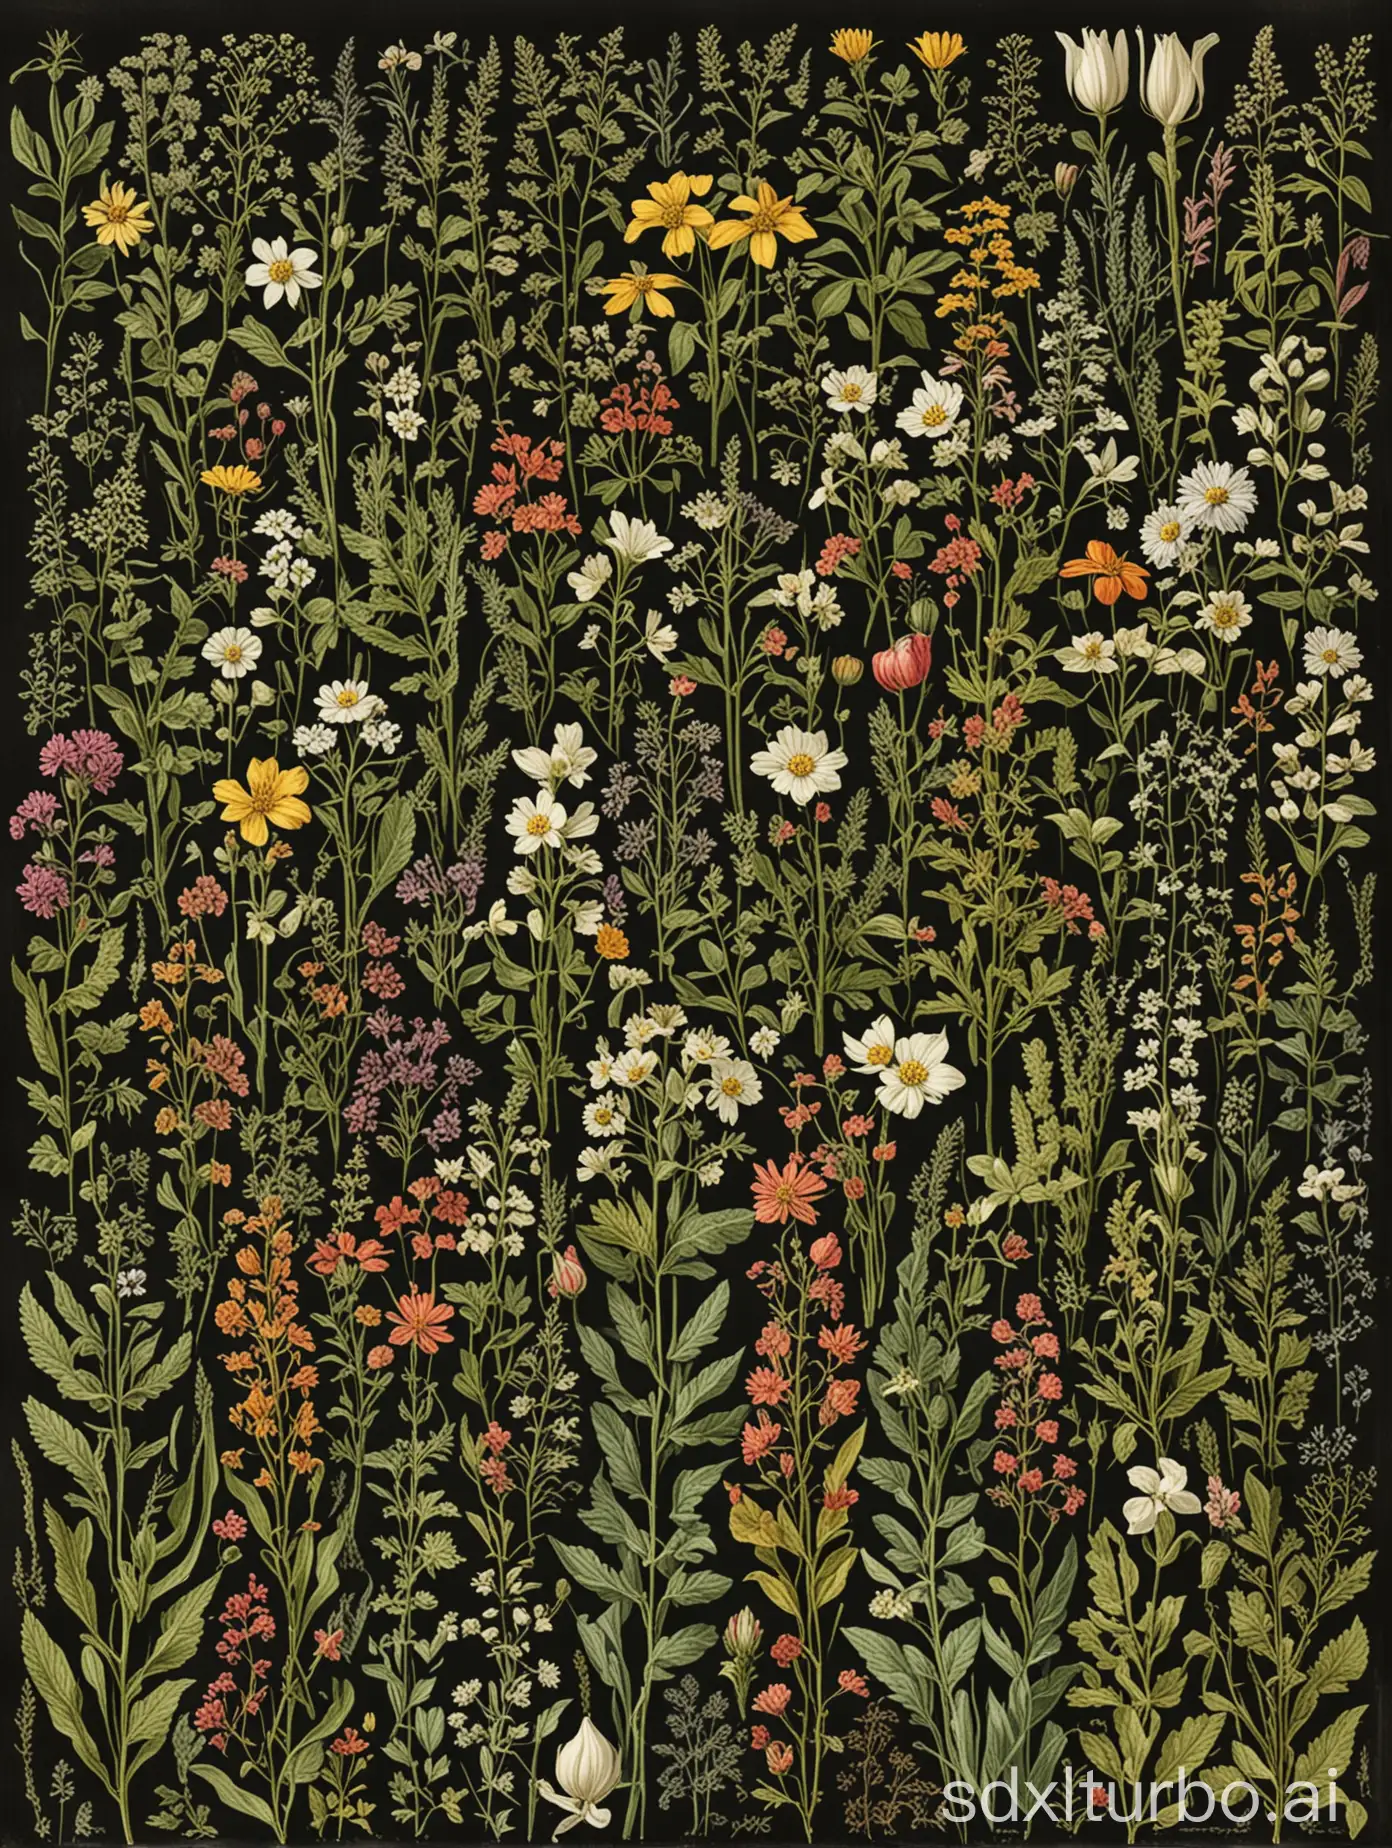 Hyper-Detailed-Botanical-Herbarium-Poster-Exquisite-Wildflower-Illustrations